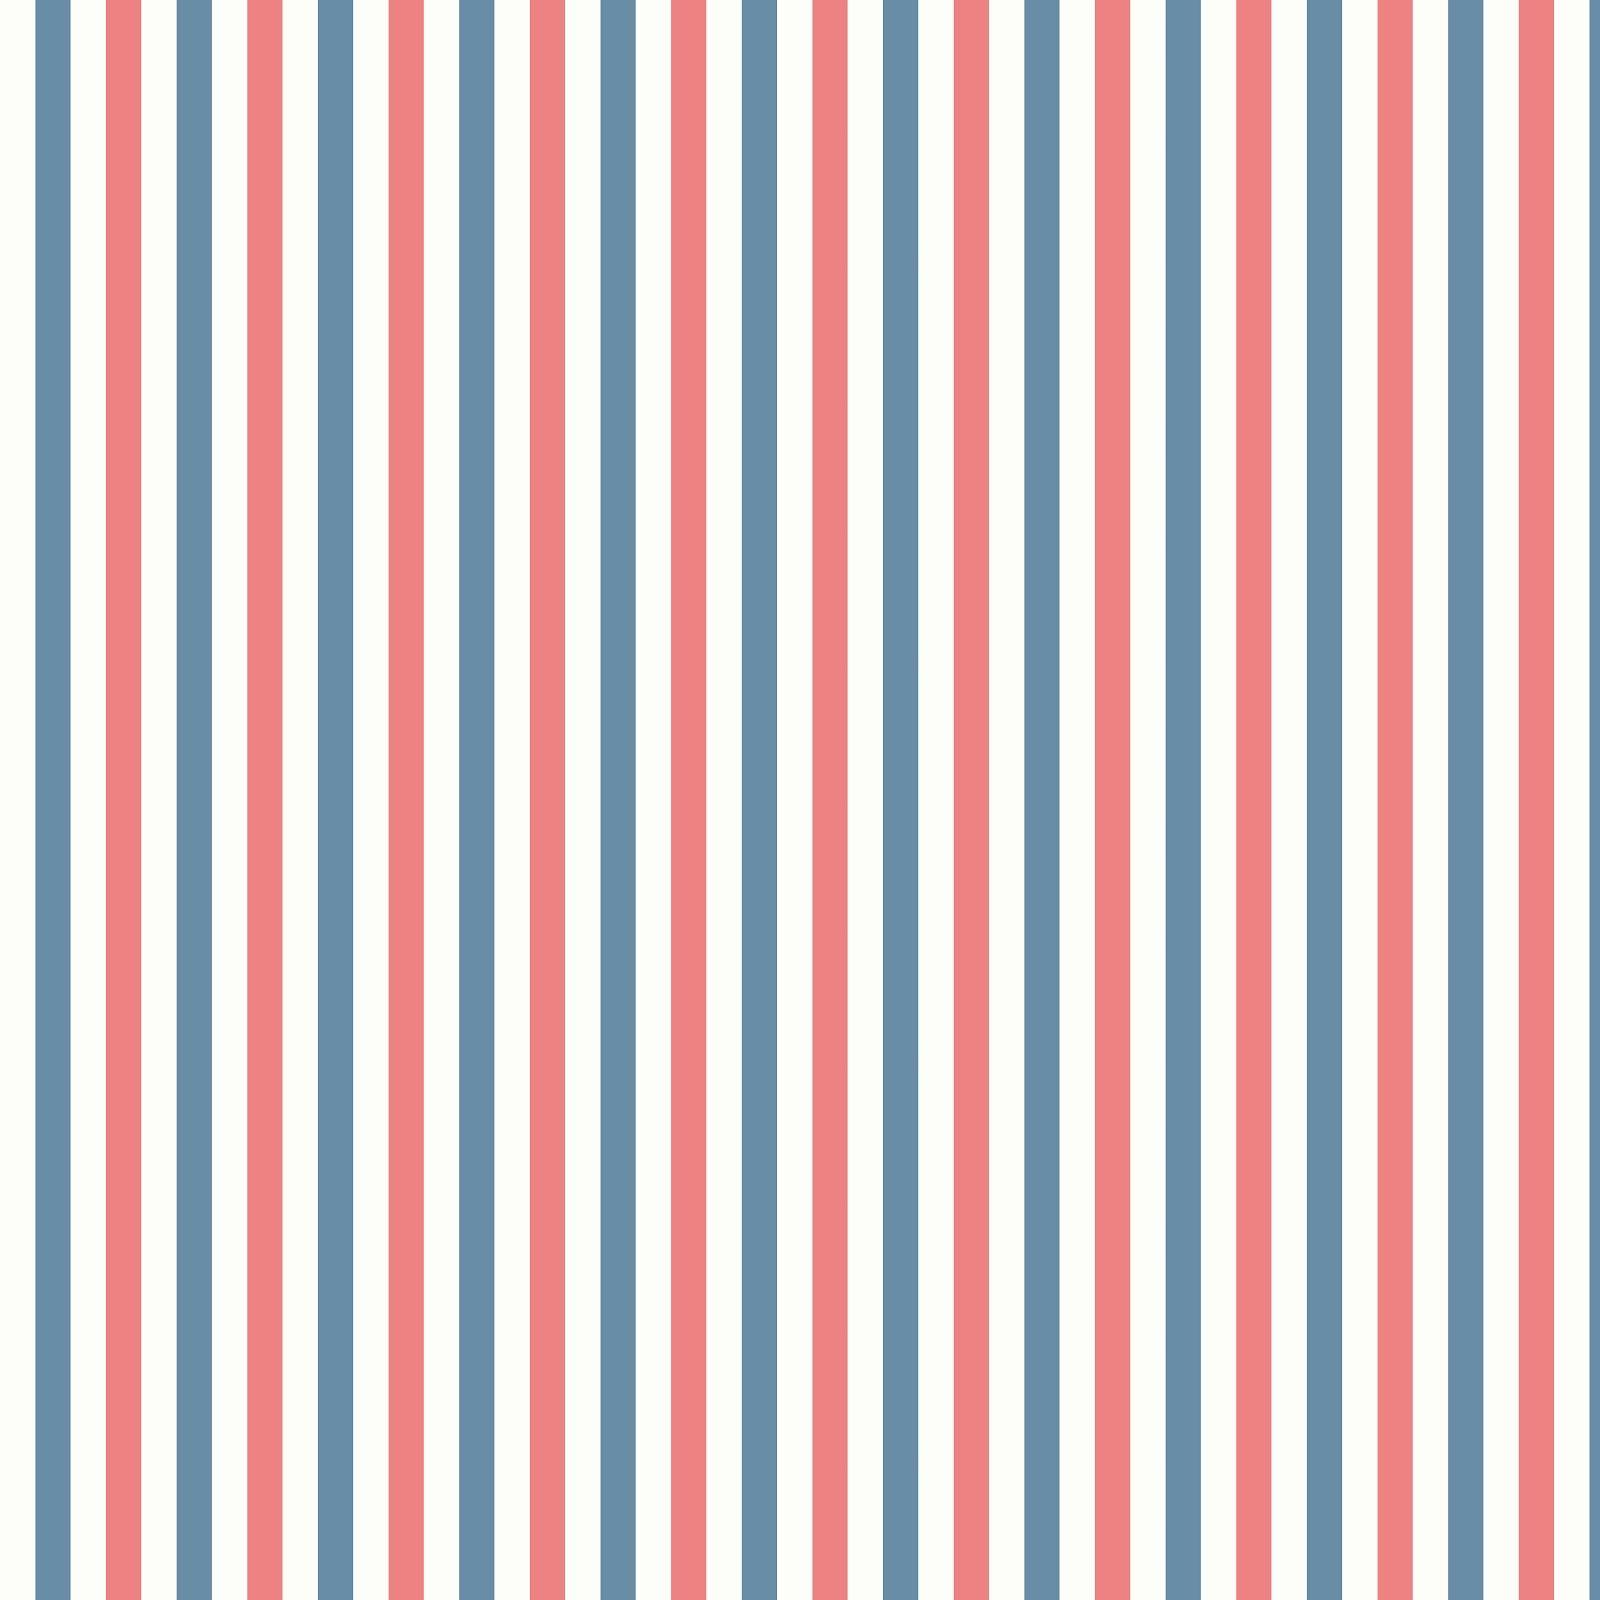 Striped White and Blue Background Logo - FREE ViNTaGE DiGiTaL STaMPS**: Free Digital Scrapbook Paper - Red ...